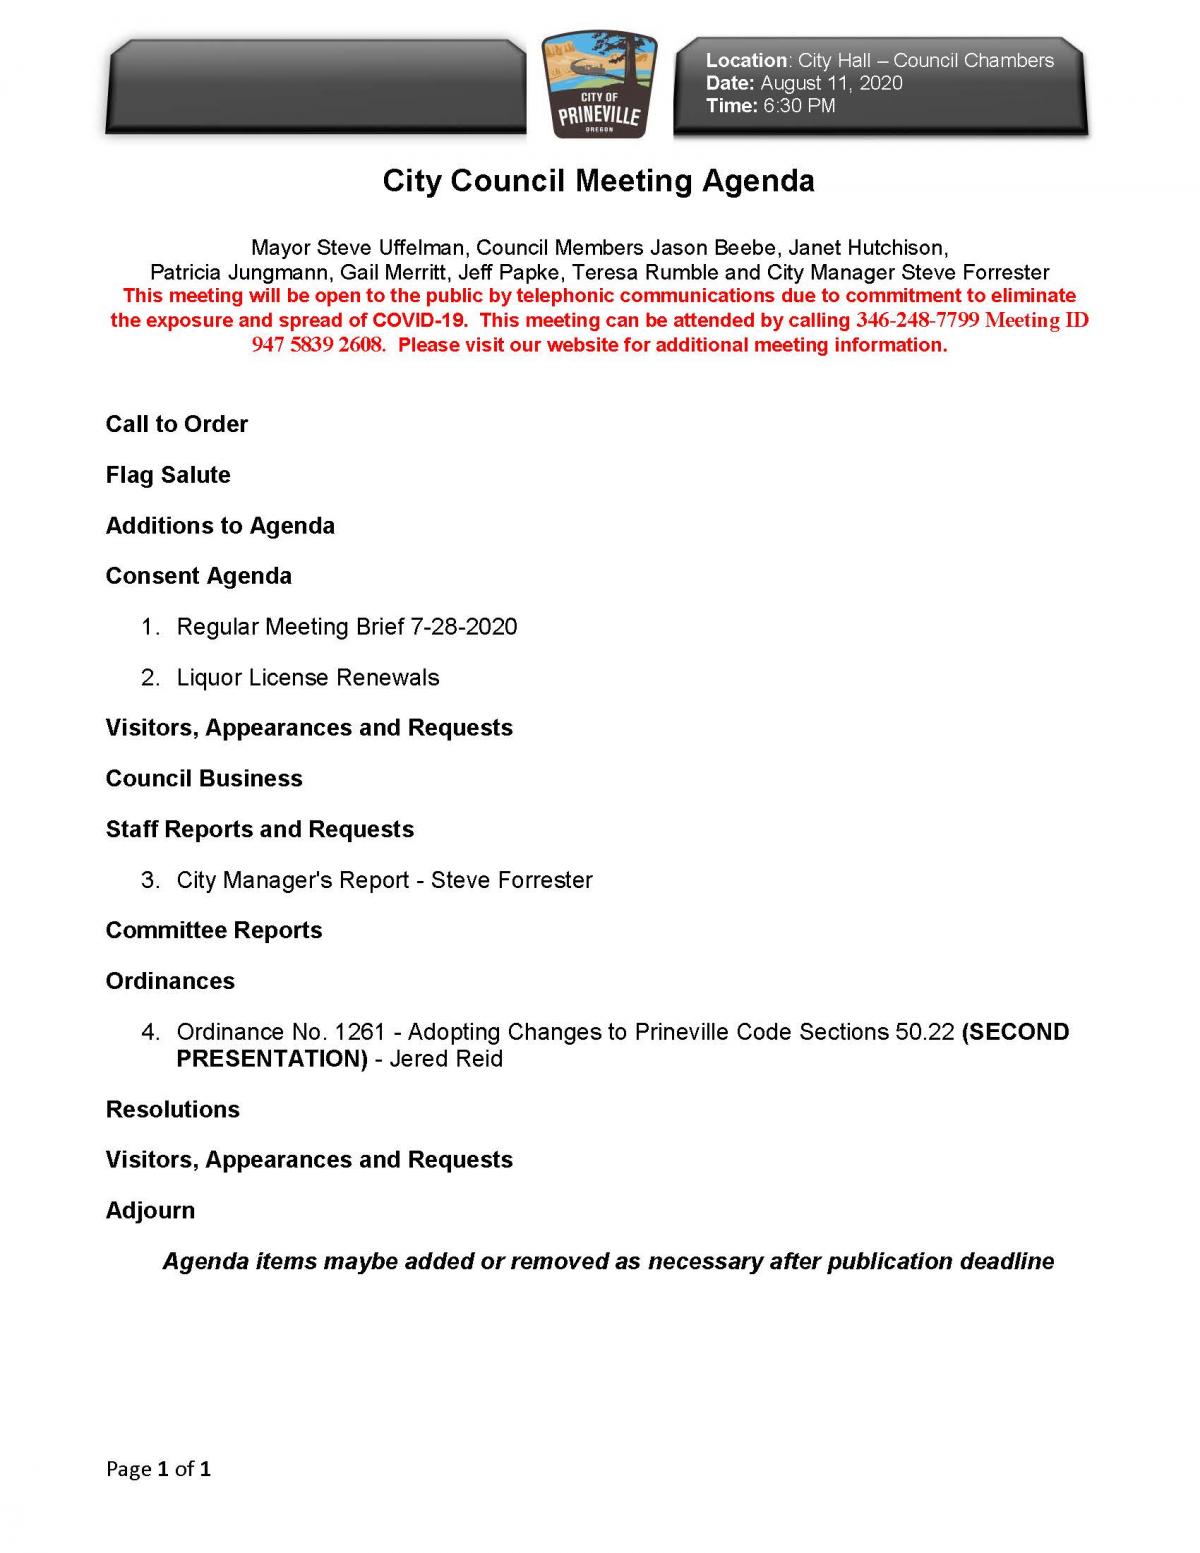 Council Agenda 8-11-2020